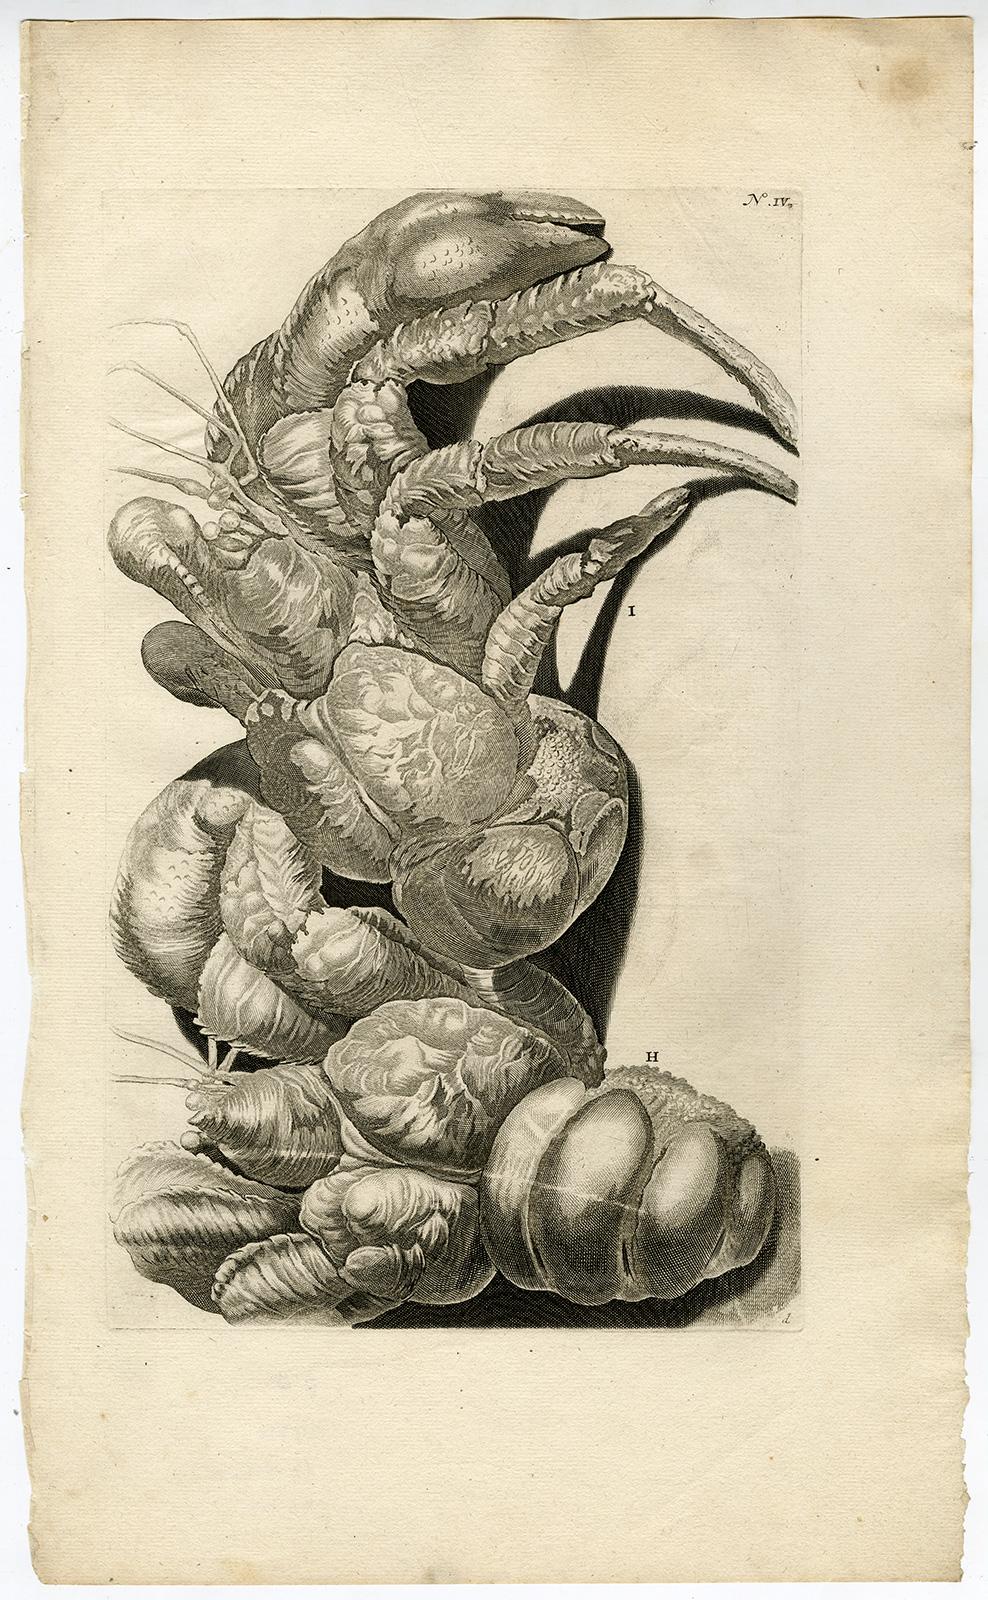 Jorg Eberhardt Rumph Animal Print - Coconut Crab - Ambonian Cabinet of Curiosities by Rumphius - Engraving - 18th c.